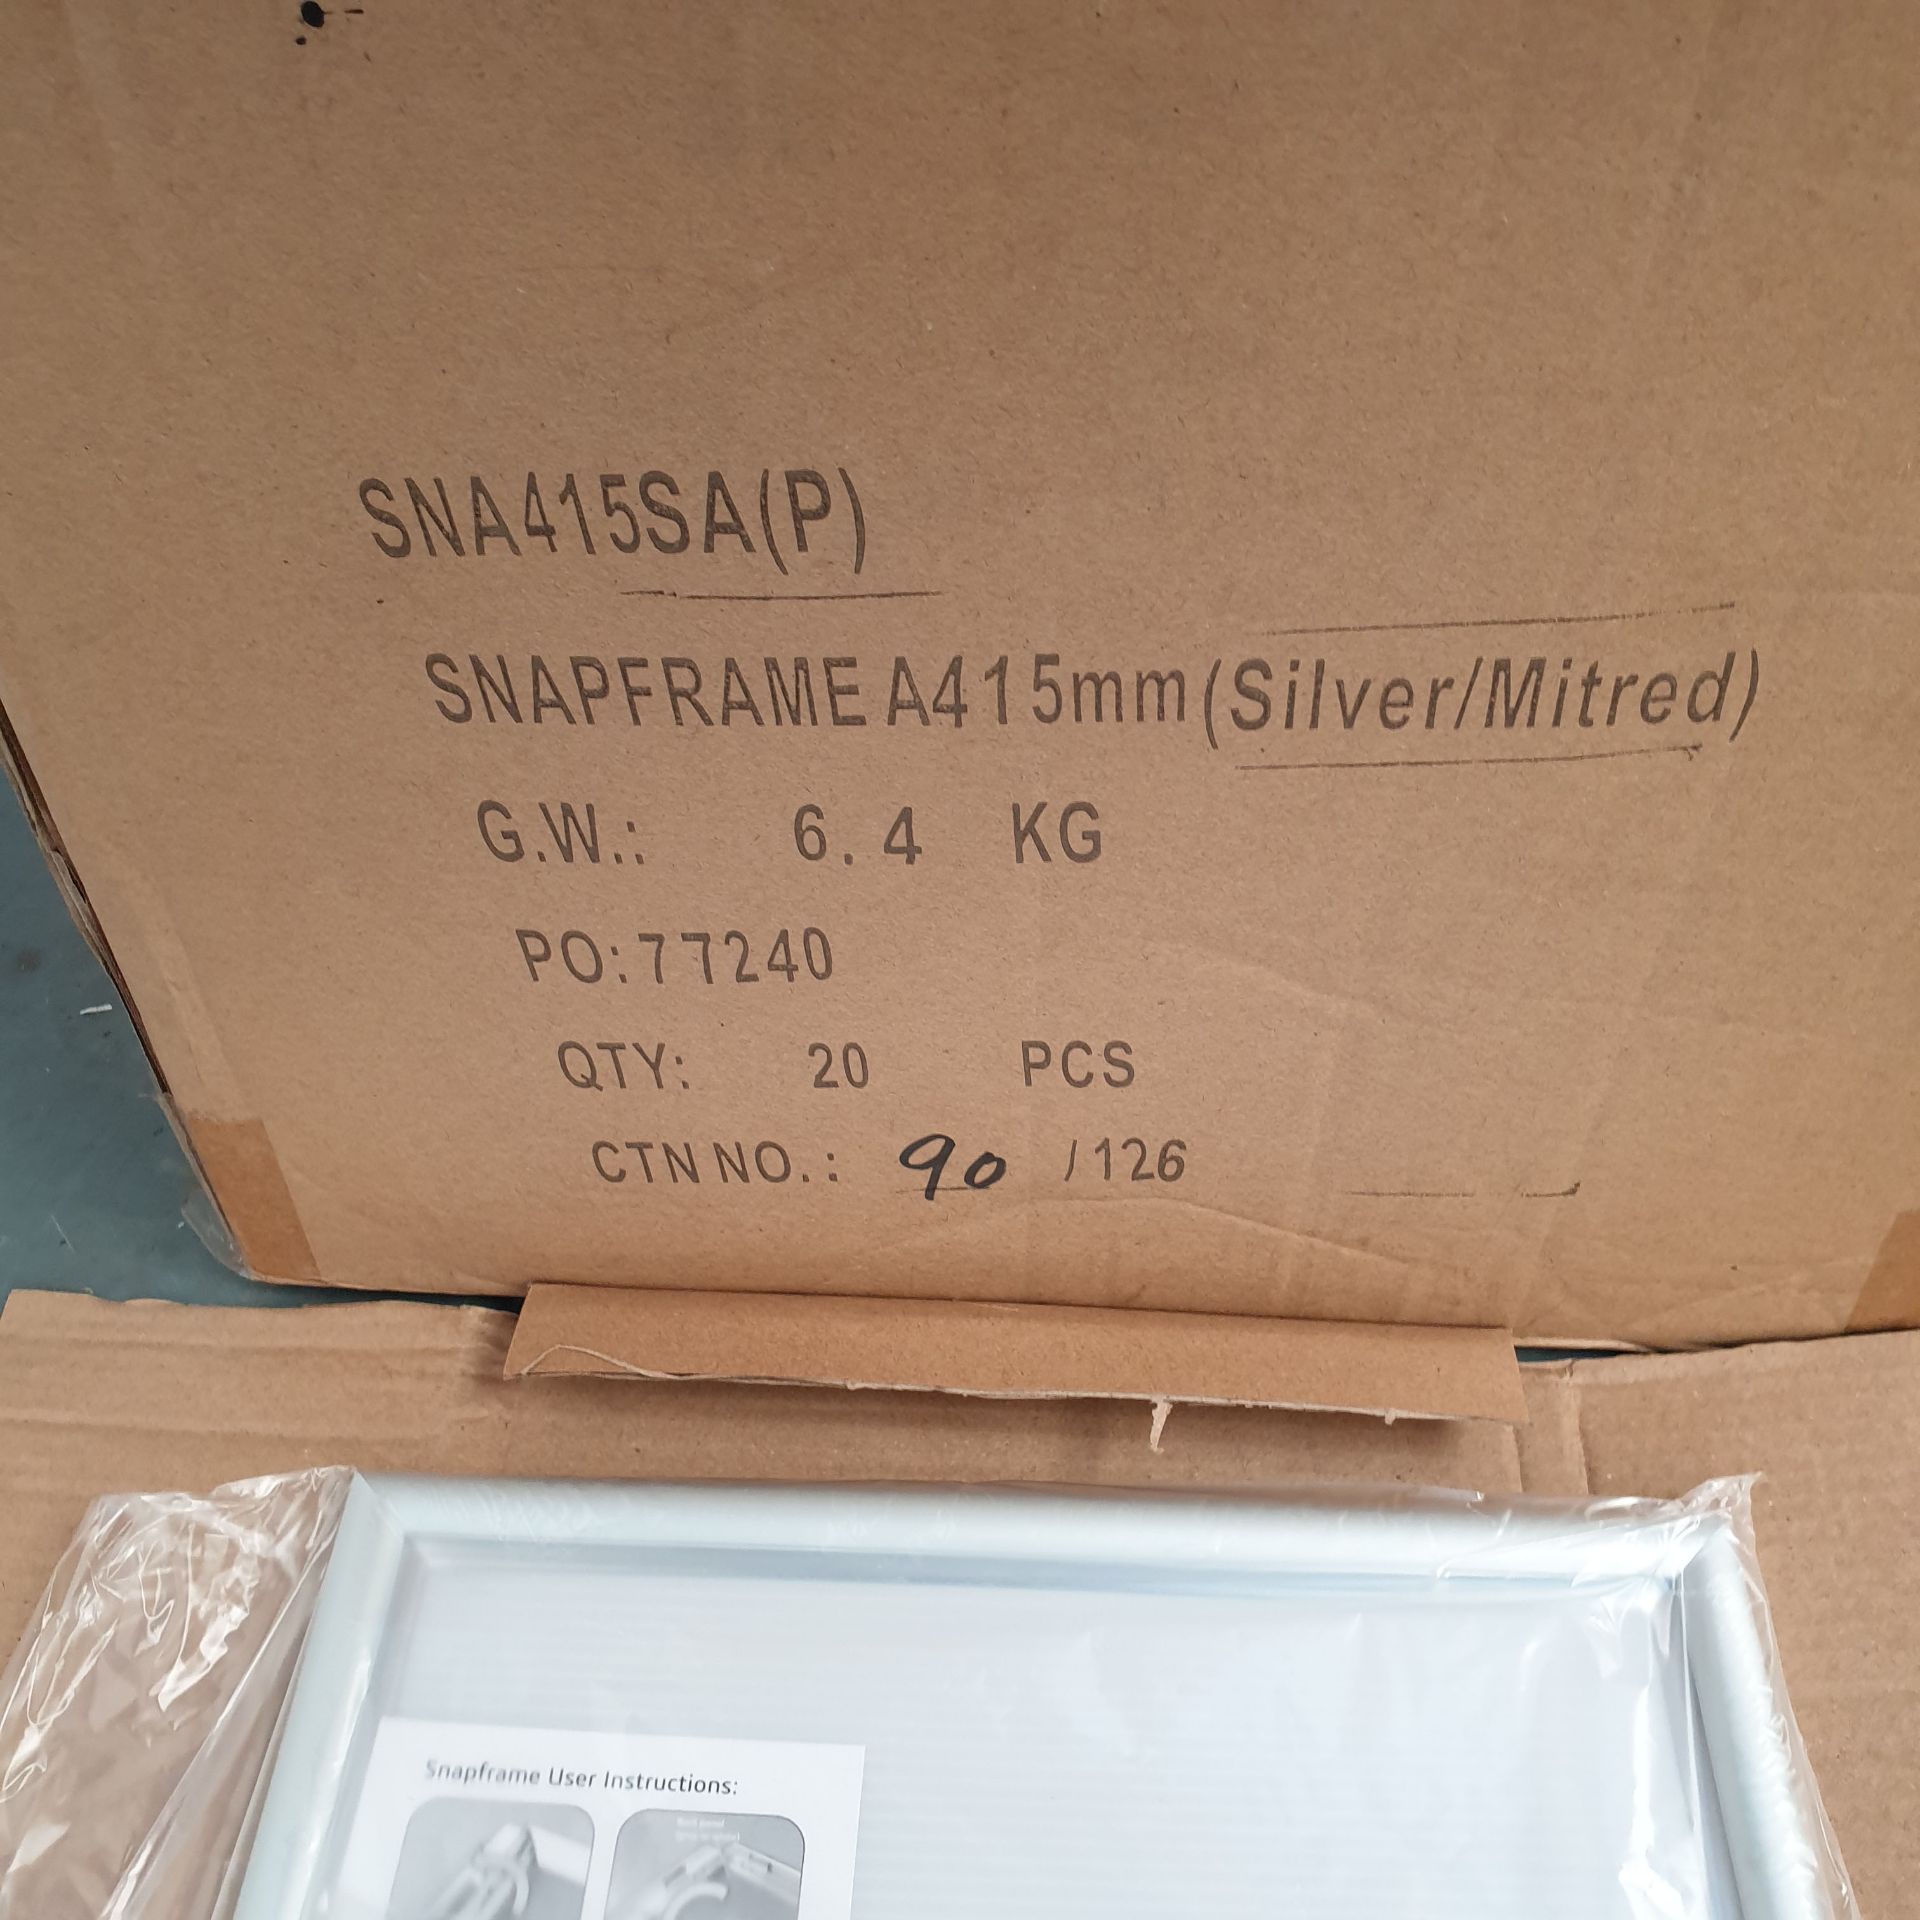 20 x Snap Frame Silver Mitred SNA415SA(P) - Image 3 of 3